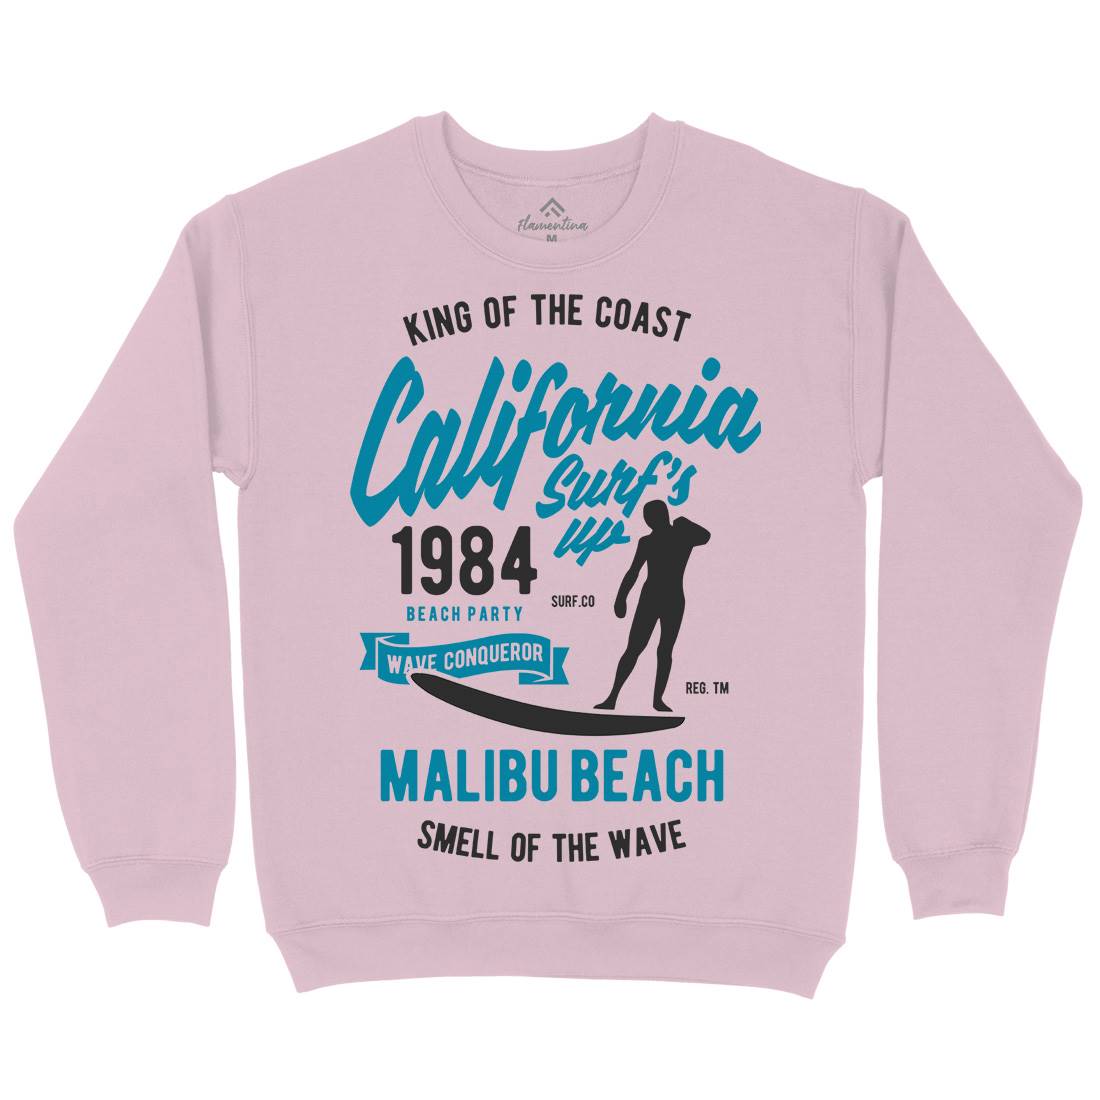 California Surfs Up Kids Crew Neck Sweatshirt Surf B389